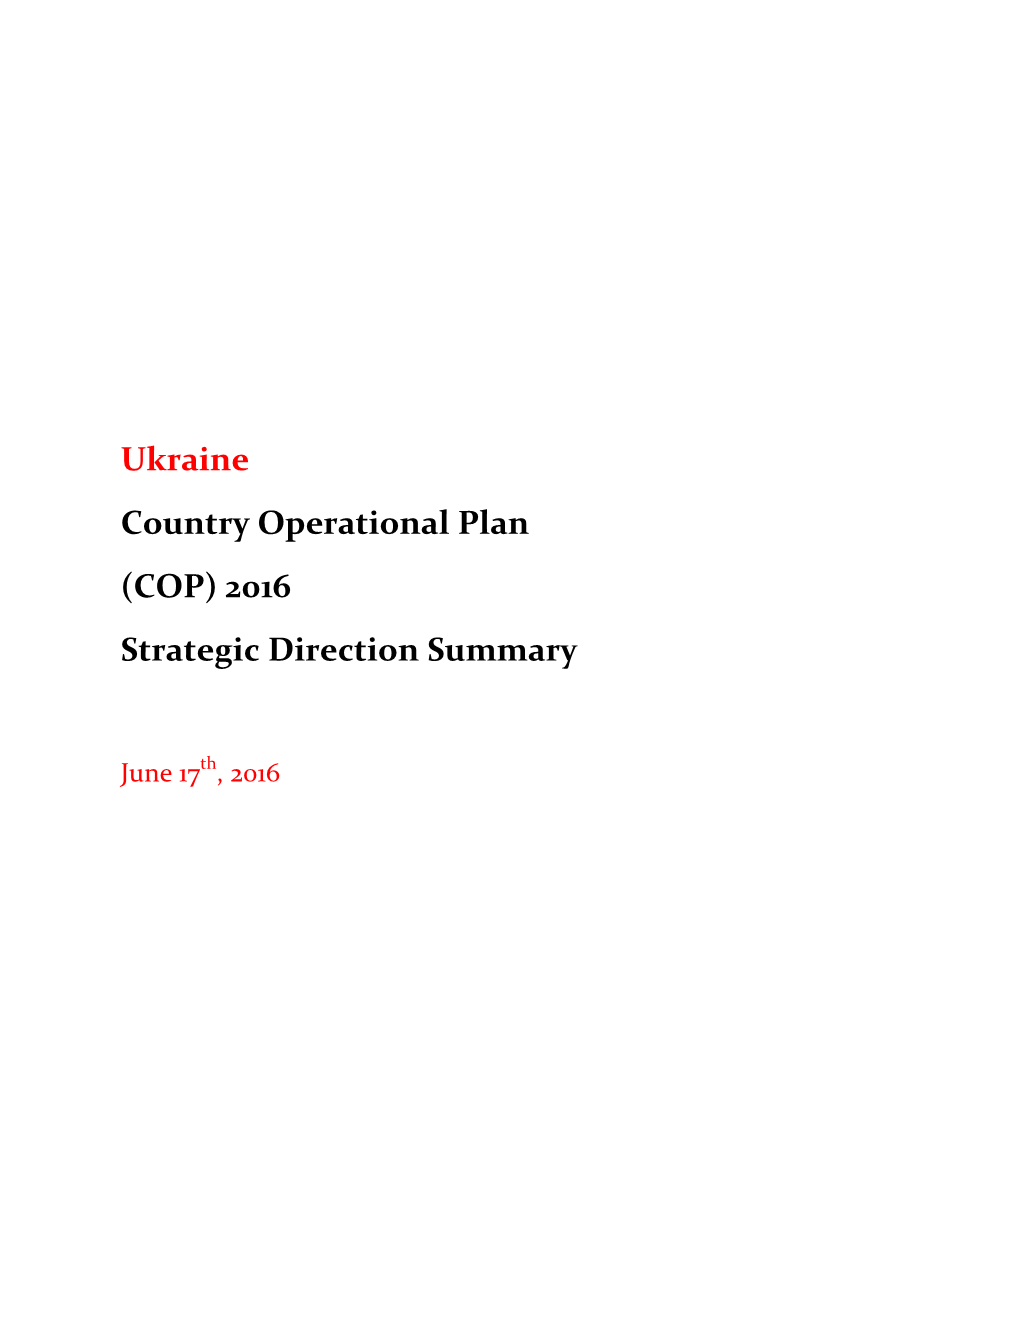 Ukraine Country Operational Plan (COP) 2016 Strategic Direction Summary